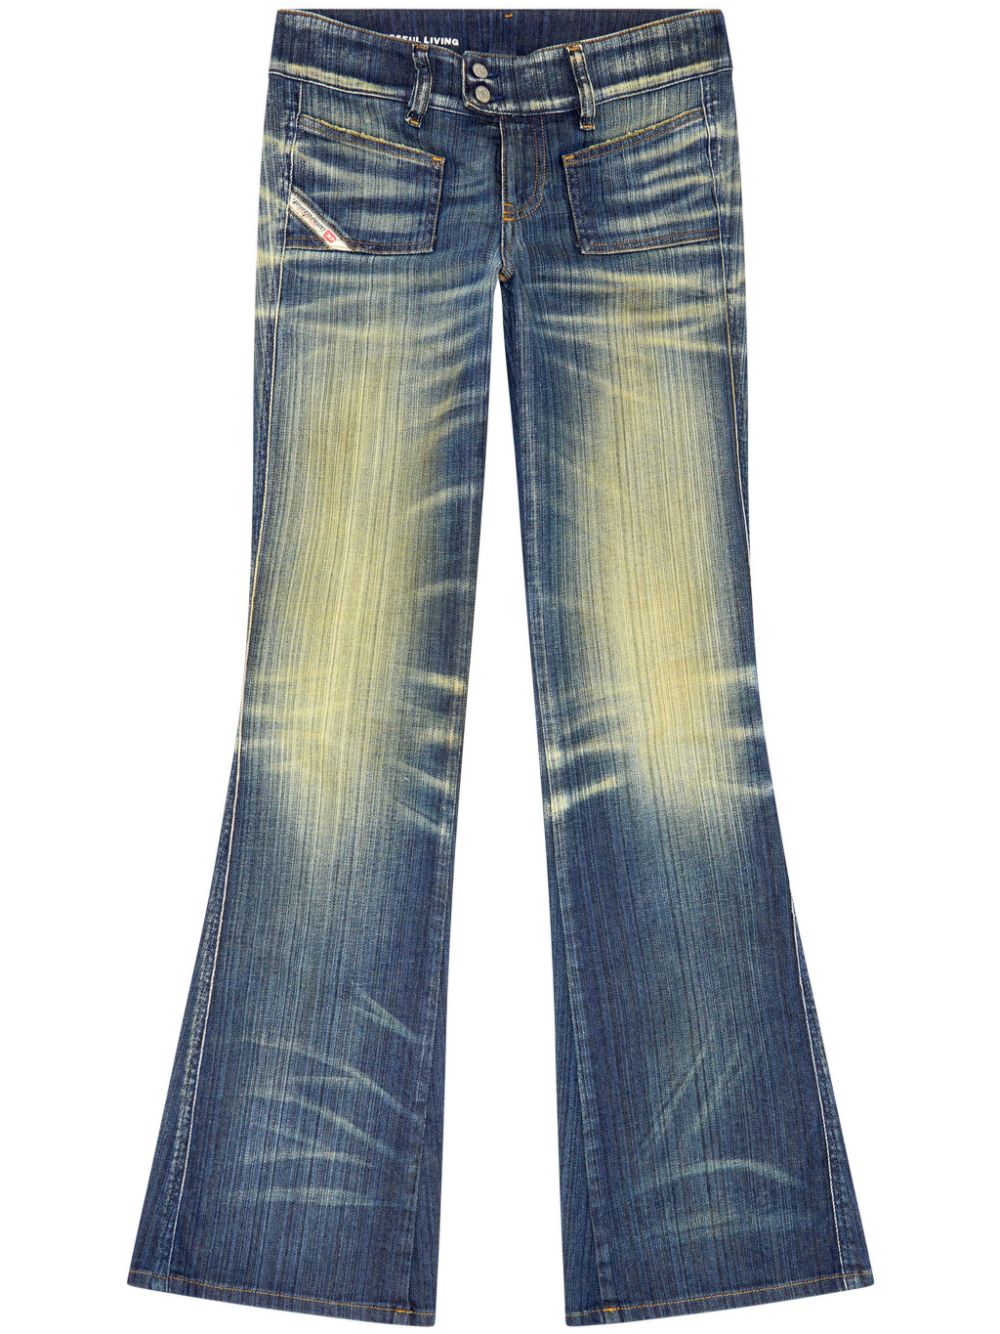 D-Hush low-rise bootcut jeans